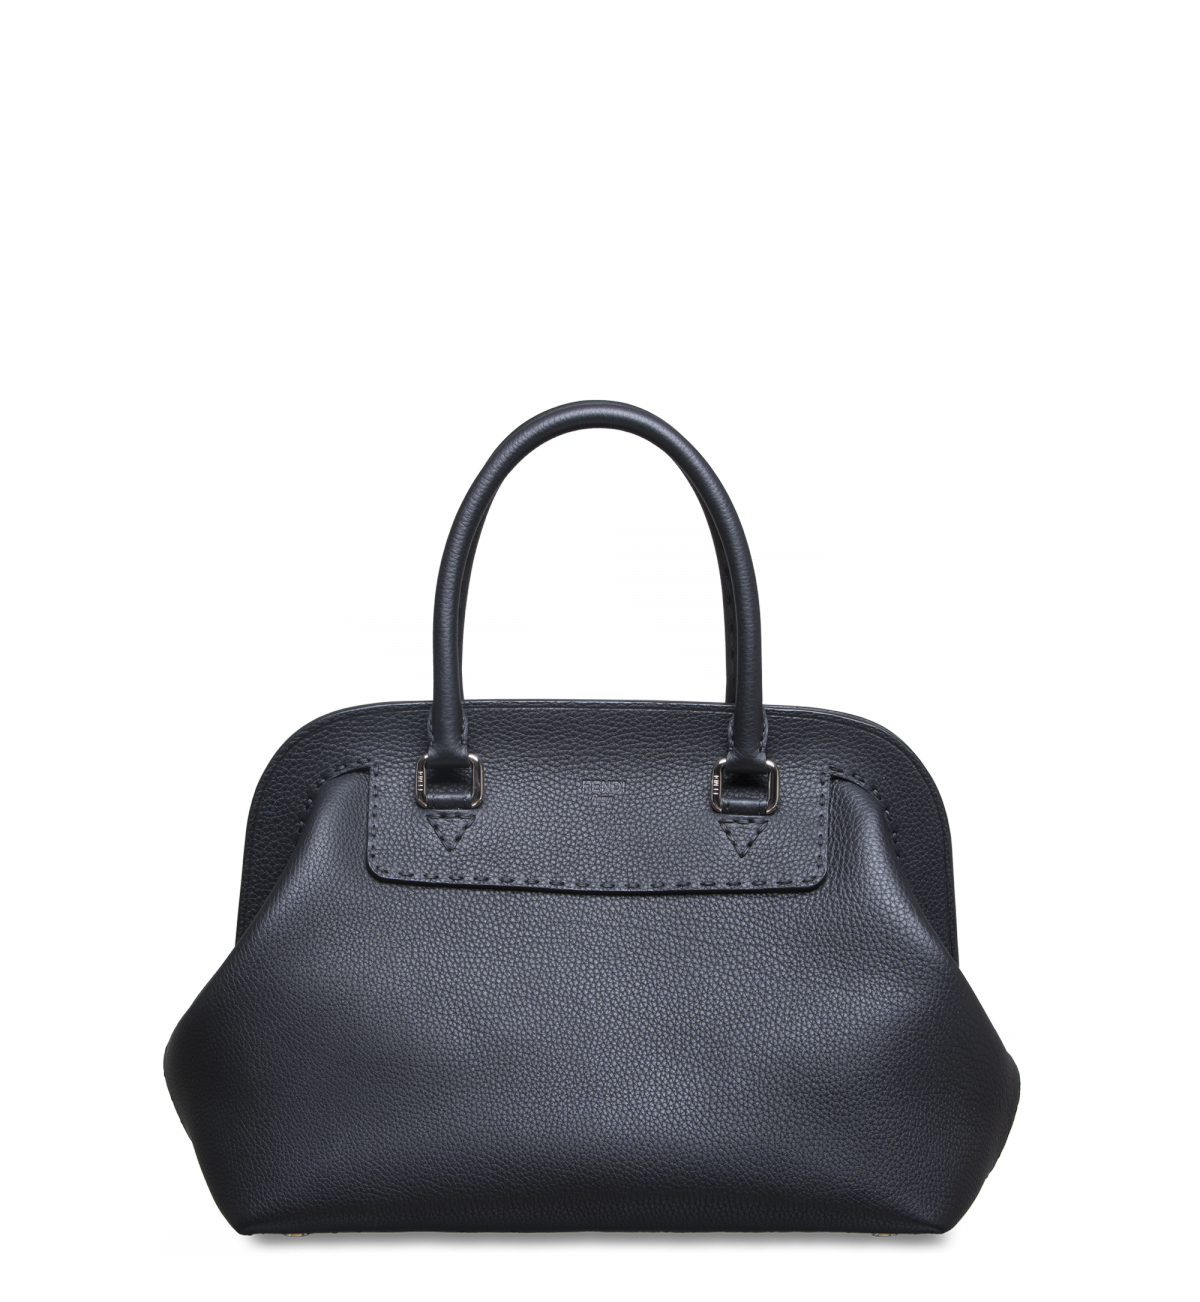 Fendi Iconic Bags And Prices | Bragmybag